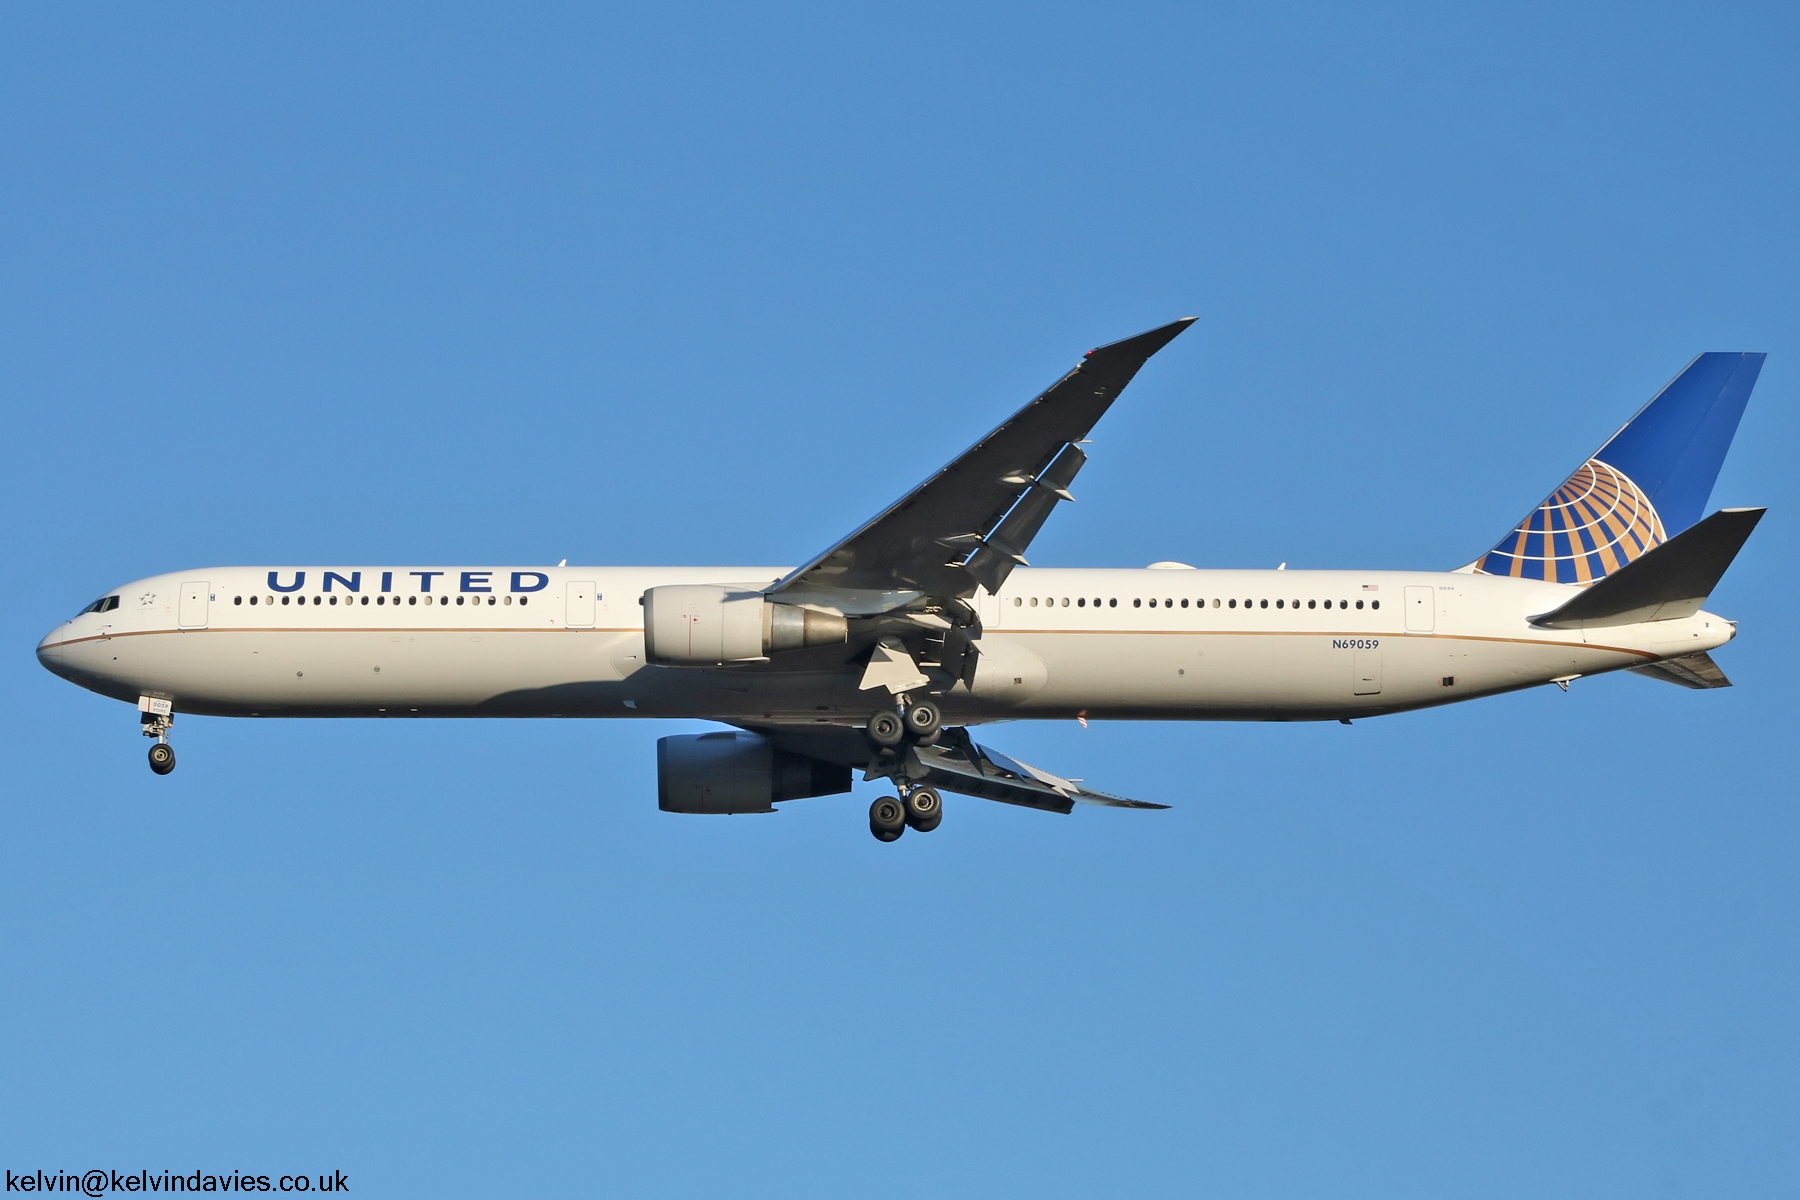 United Airlines 767 N69059